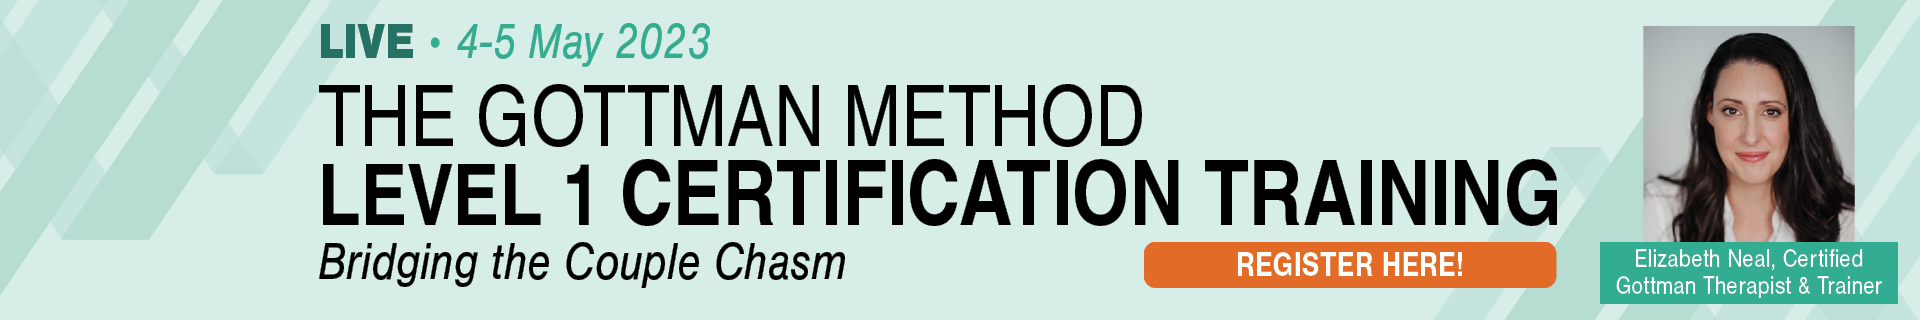 The Gottman Method Level 1 Certification Training: Bridging the Couple Chasm